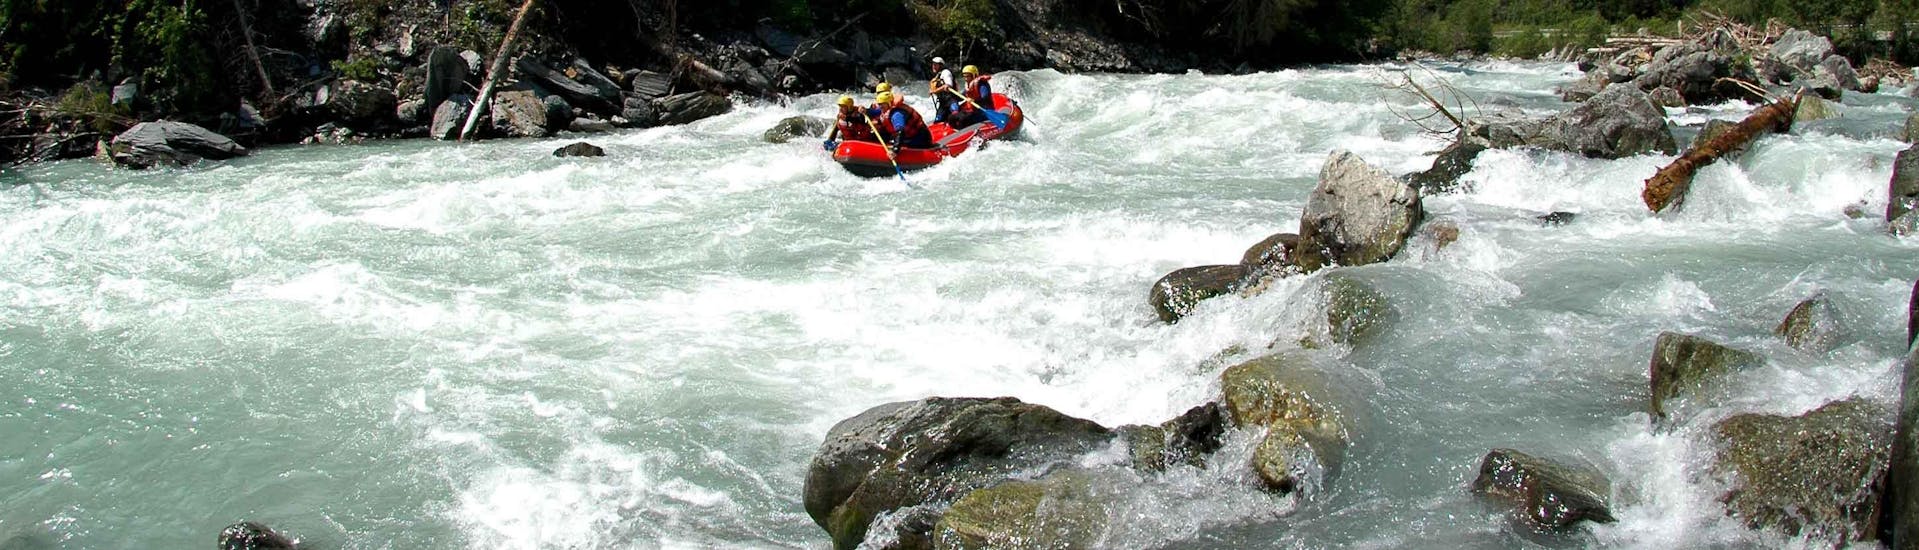 Rafting through Giarsun Gorge on the Inn River with Engadin Adventure - Hero image